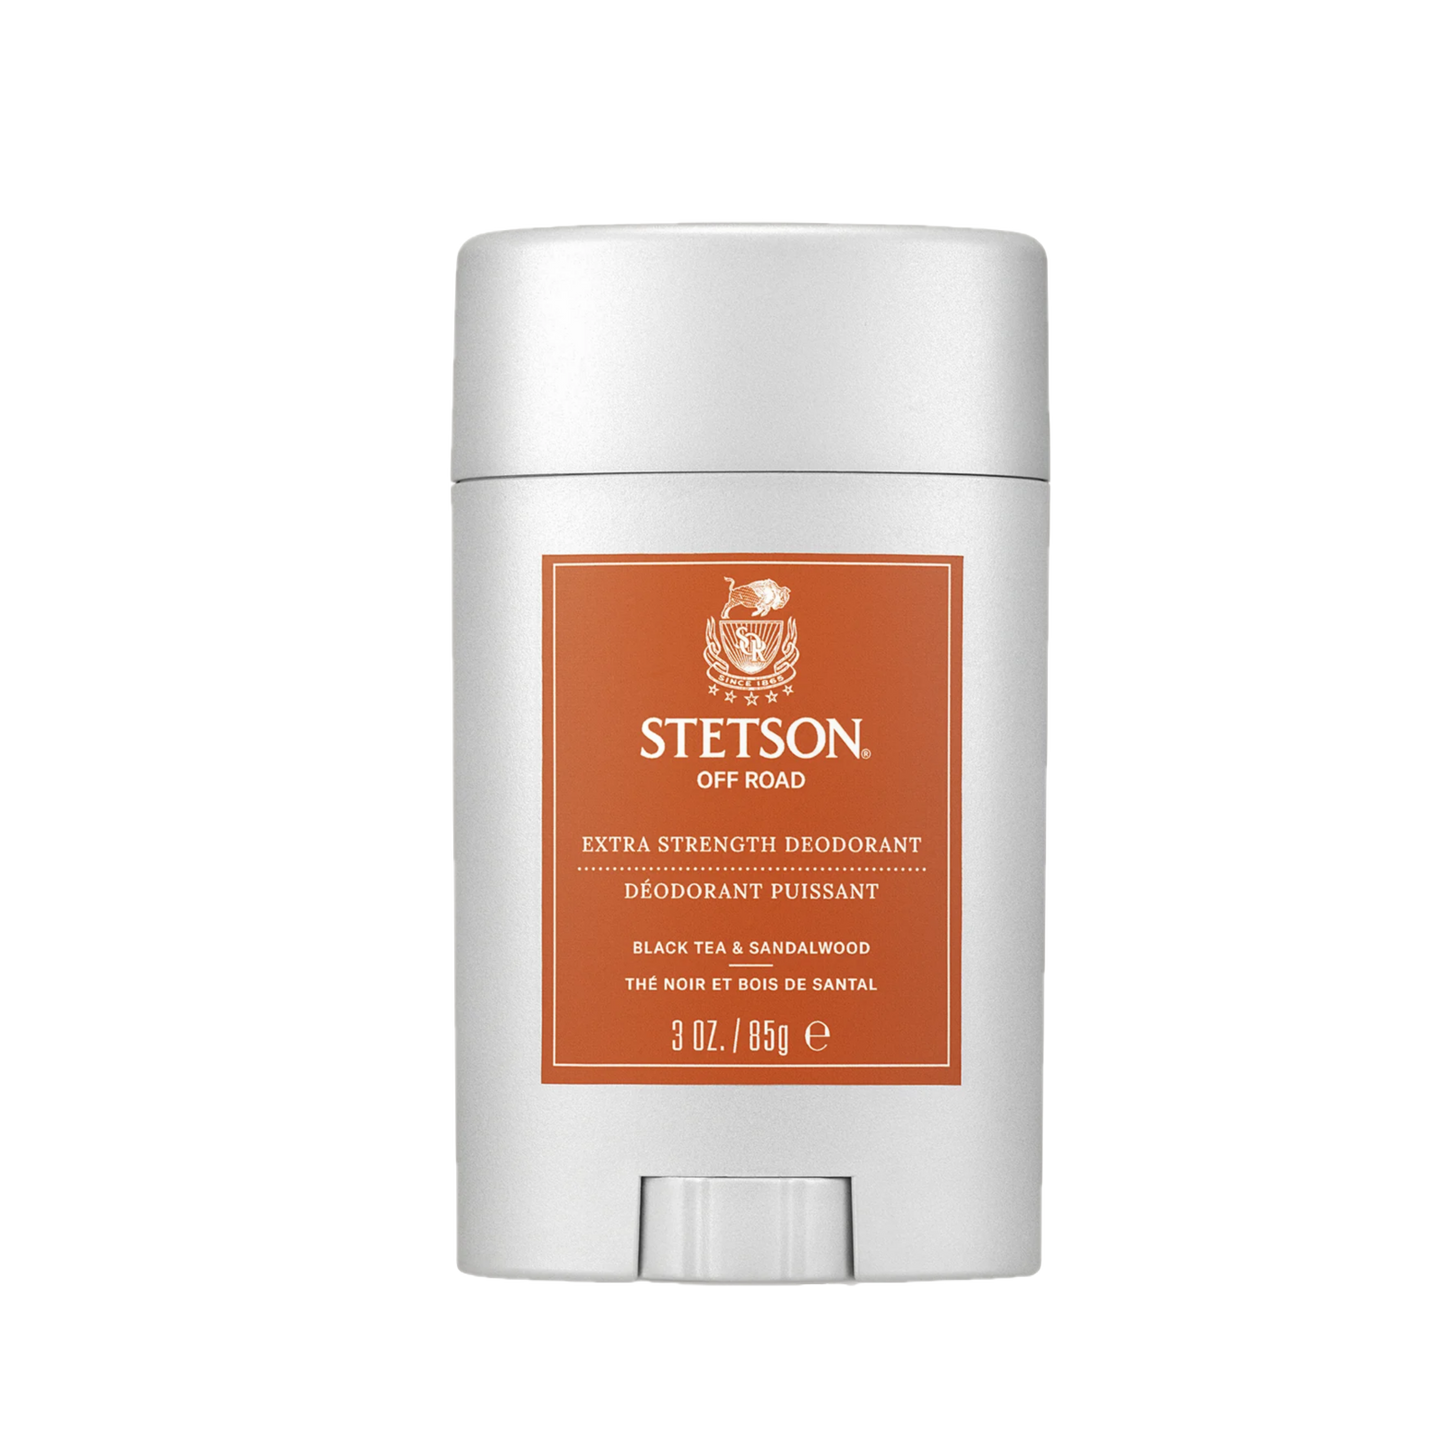 Stetson Men's 3oz Off Road Extra Strength Deodorant 03-099-1000-9027